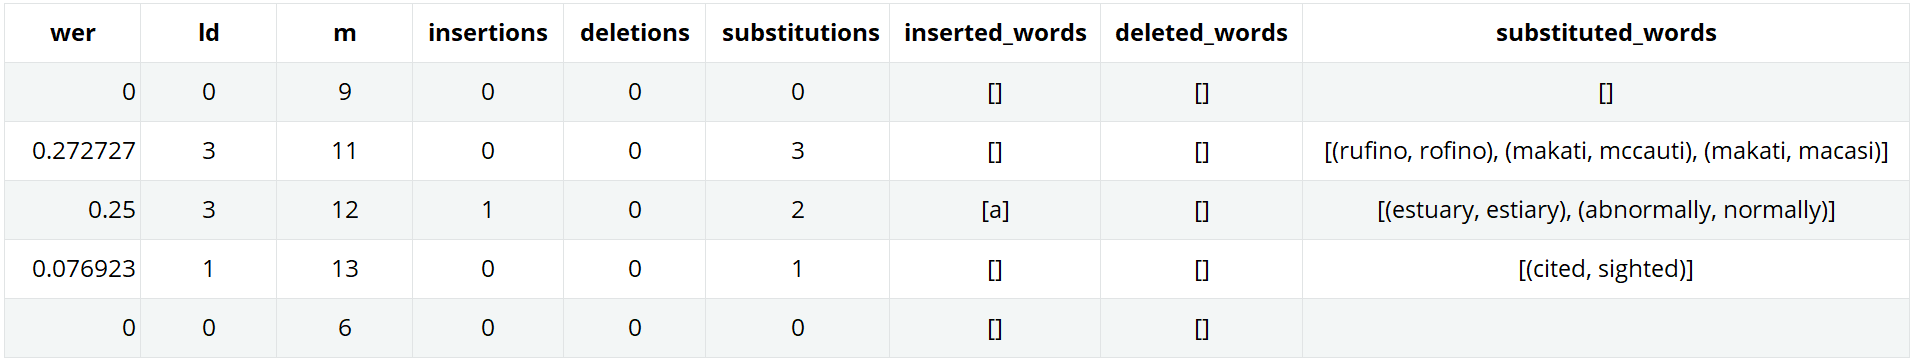 werpy-example-summary-results-word-error-rate-breakdown